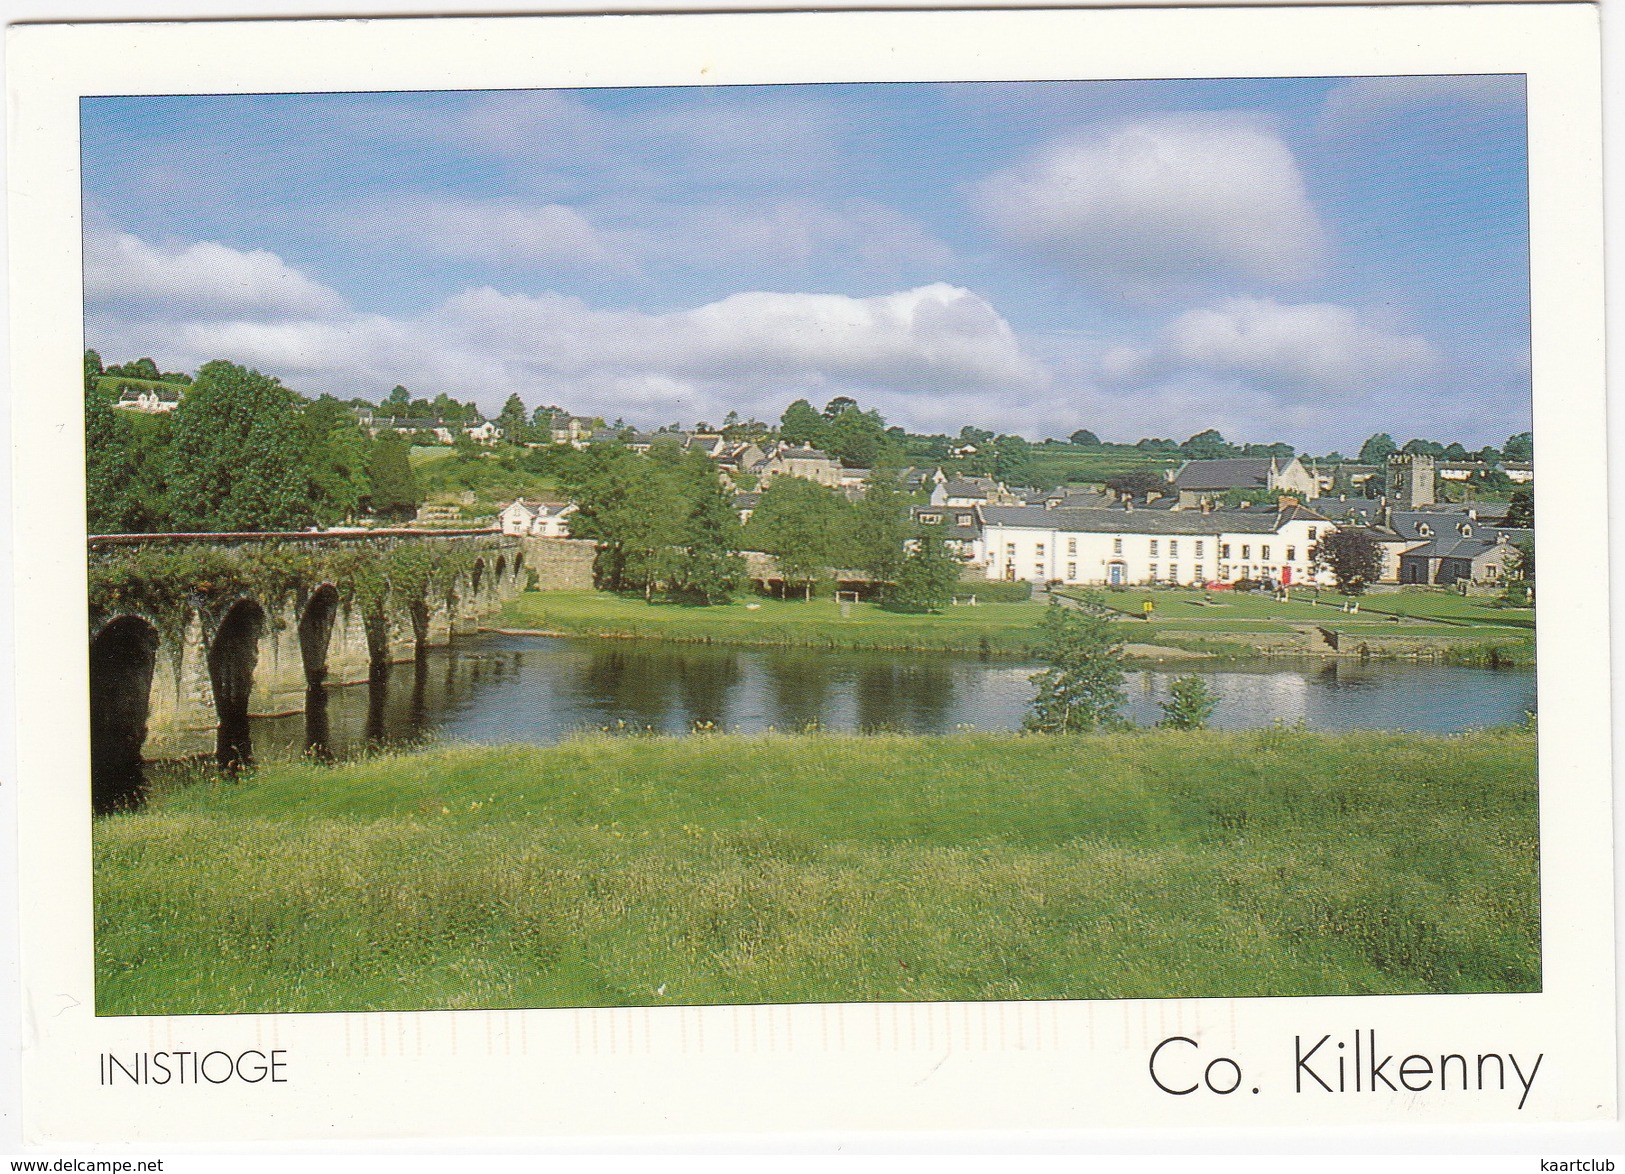 Inistioge, Nore Valley -  (Co. Kilkenny, Ireland) - Kilkenny